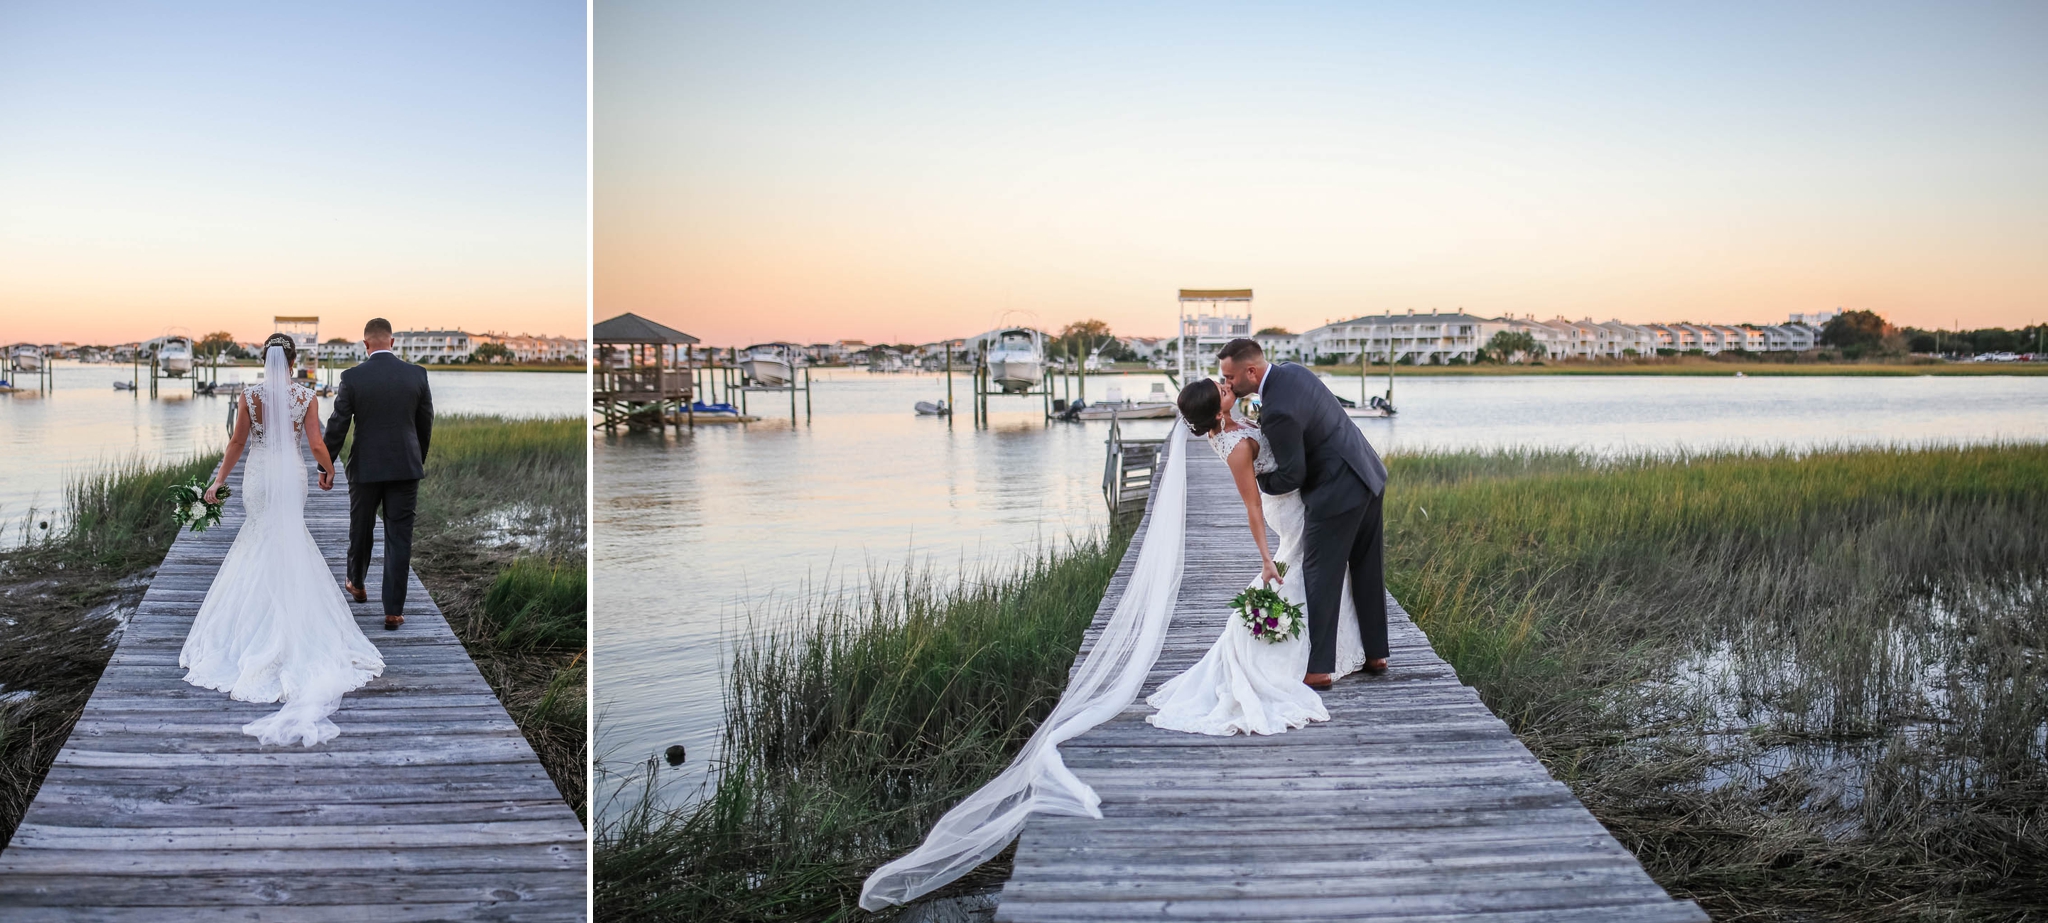 Alison + Thomas - Garden Outdoor Wedding Photography on the Coast in Wilmington North Carolina  11.jpg